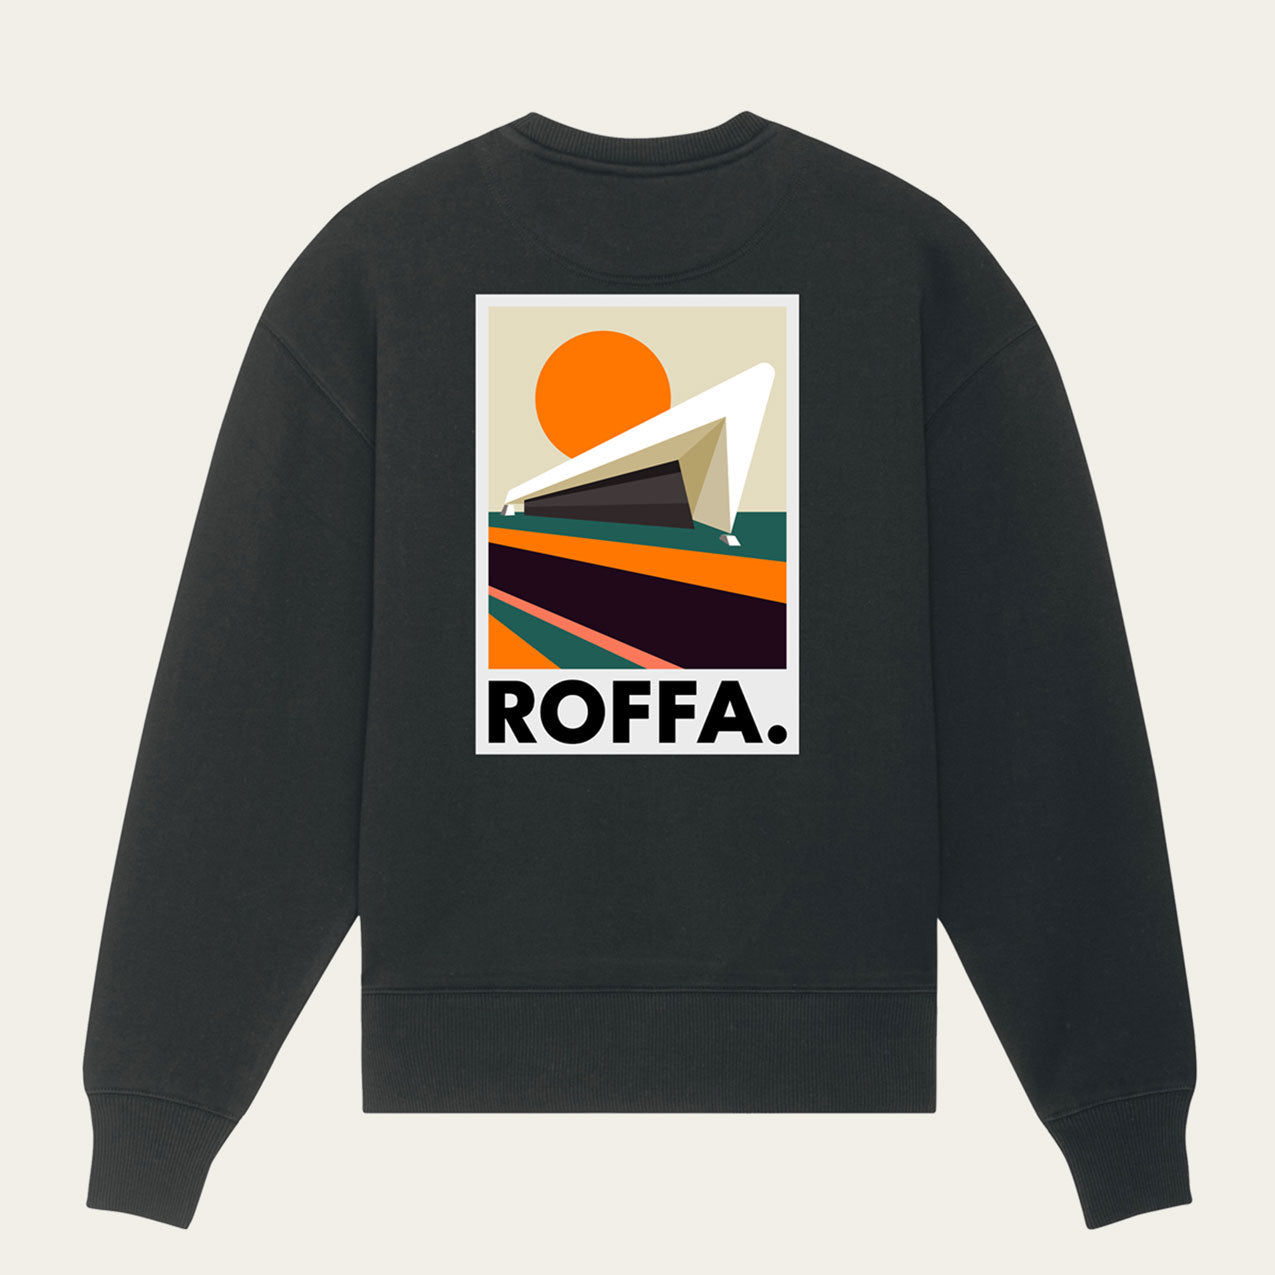 Zwarte trui met ROFFA. rotterdam centraal station opdruk